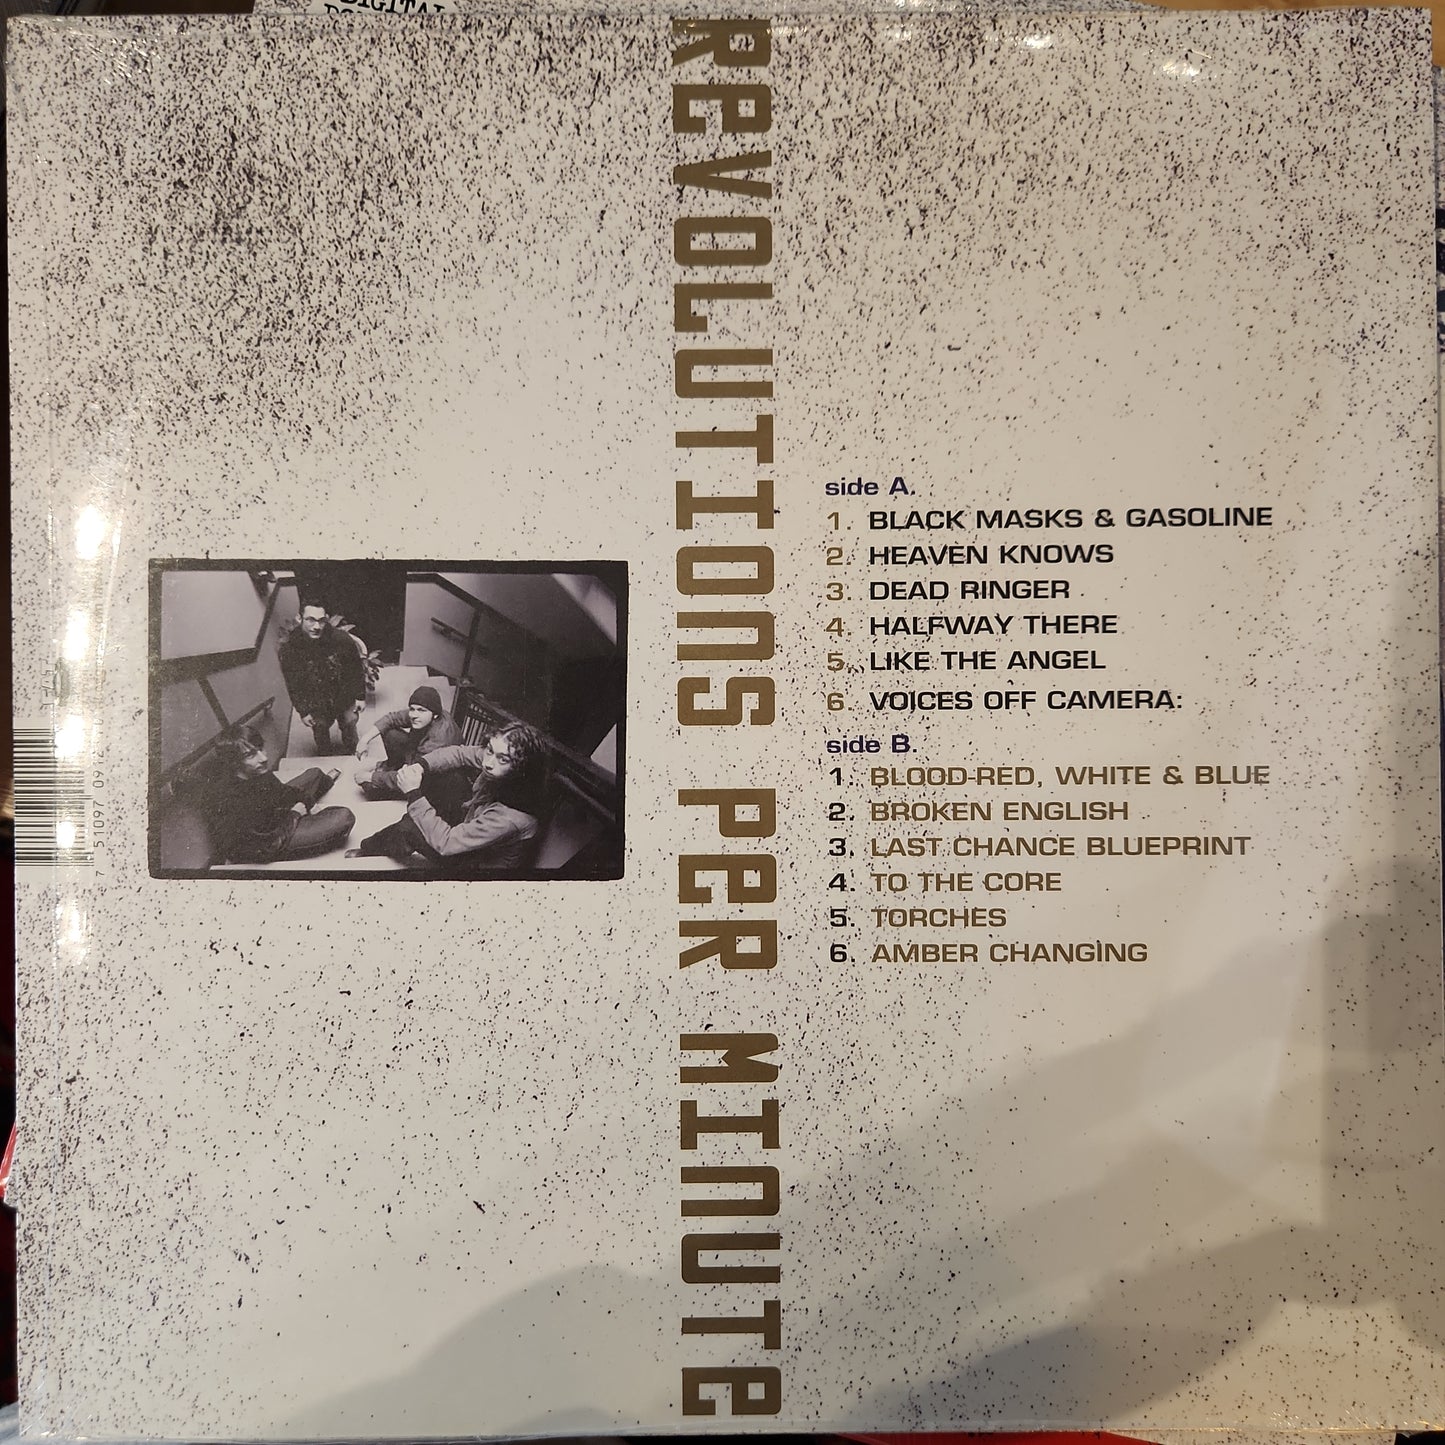 Rise Against - RPM10 - Vinyl LP